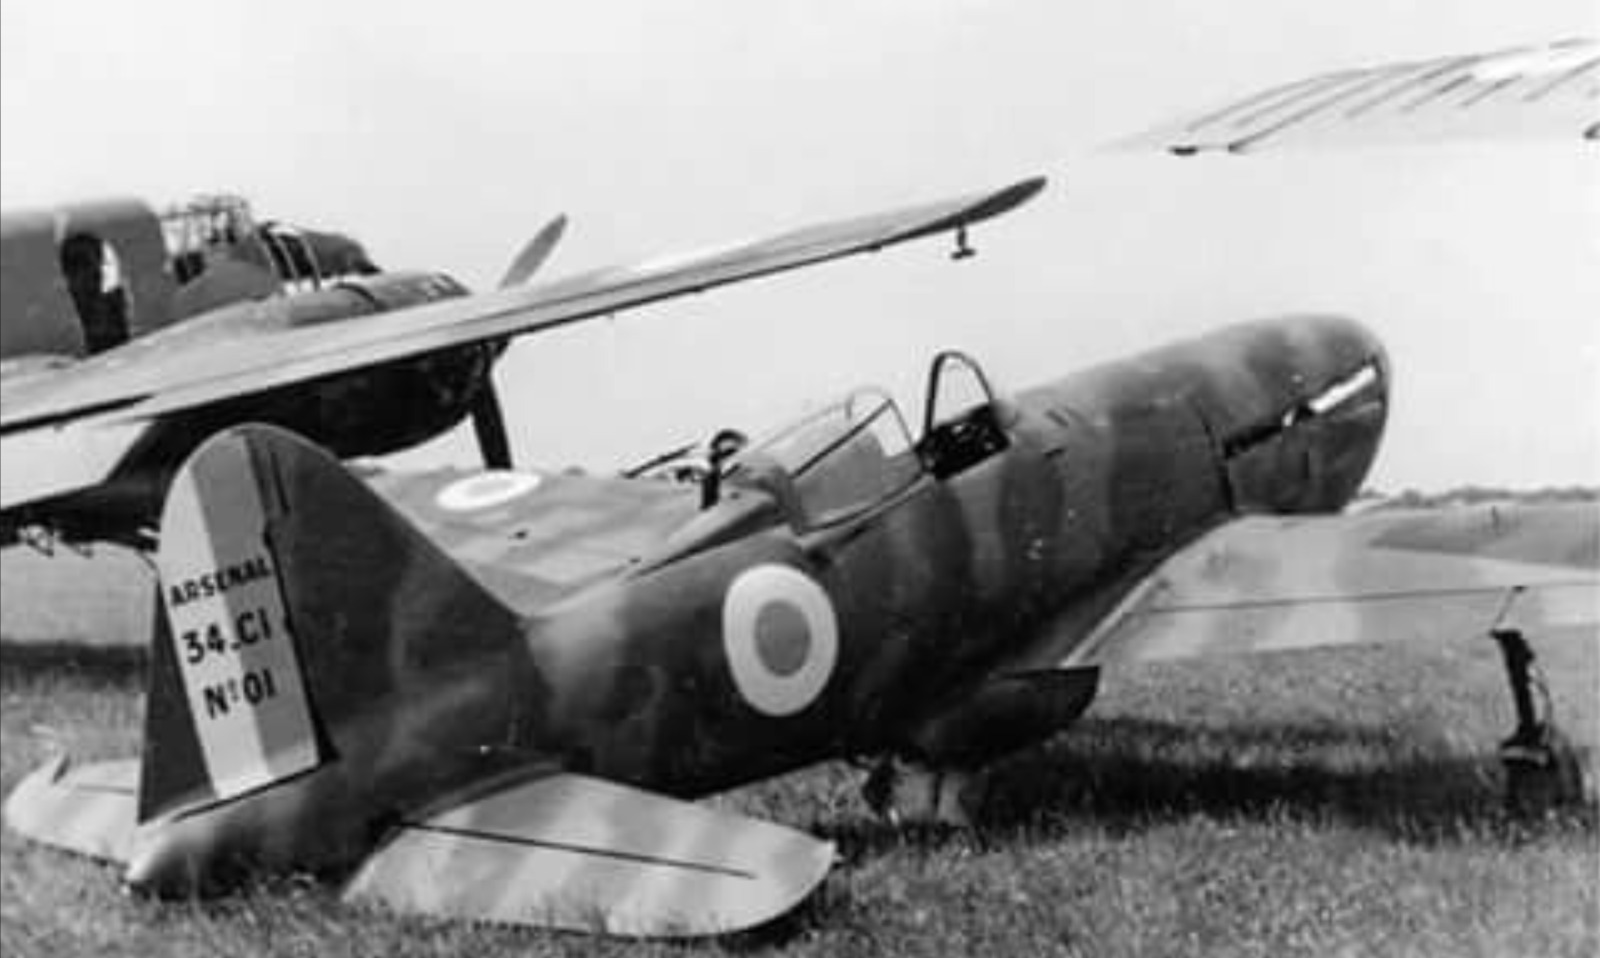 Arsenal VG-34 Wood Desk Model Big New WW2 Monoplane Fighter/Fighter Bomber